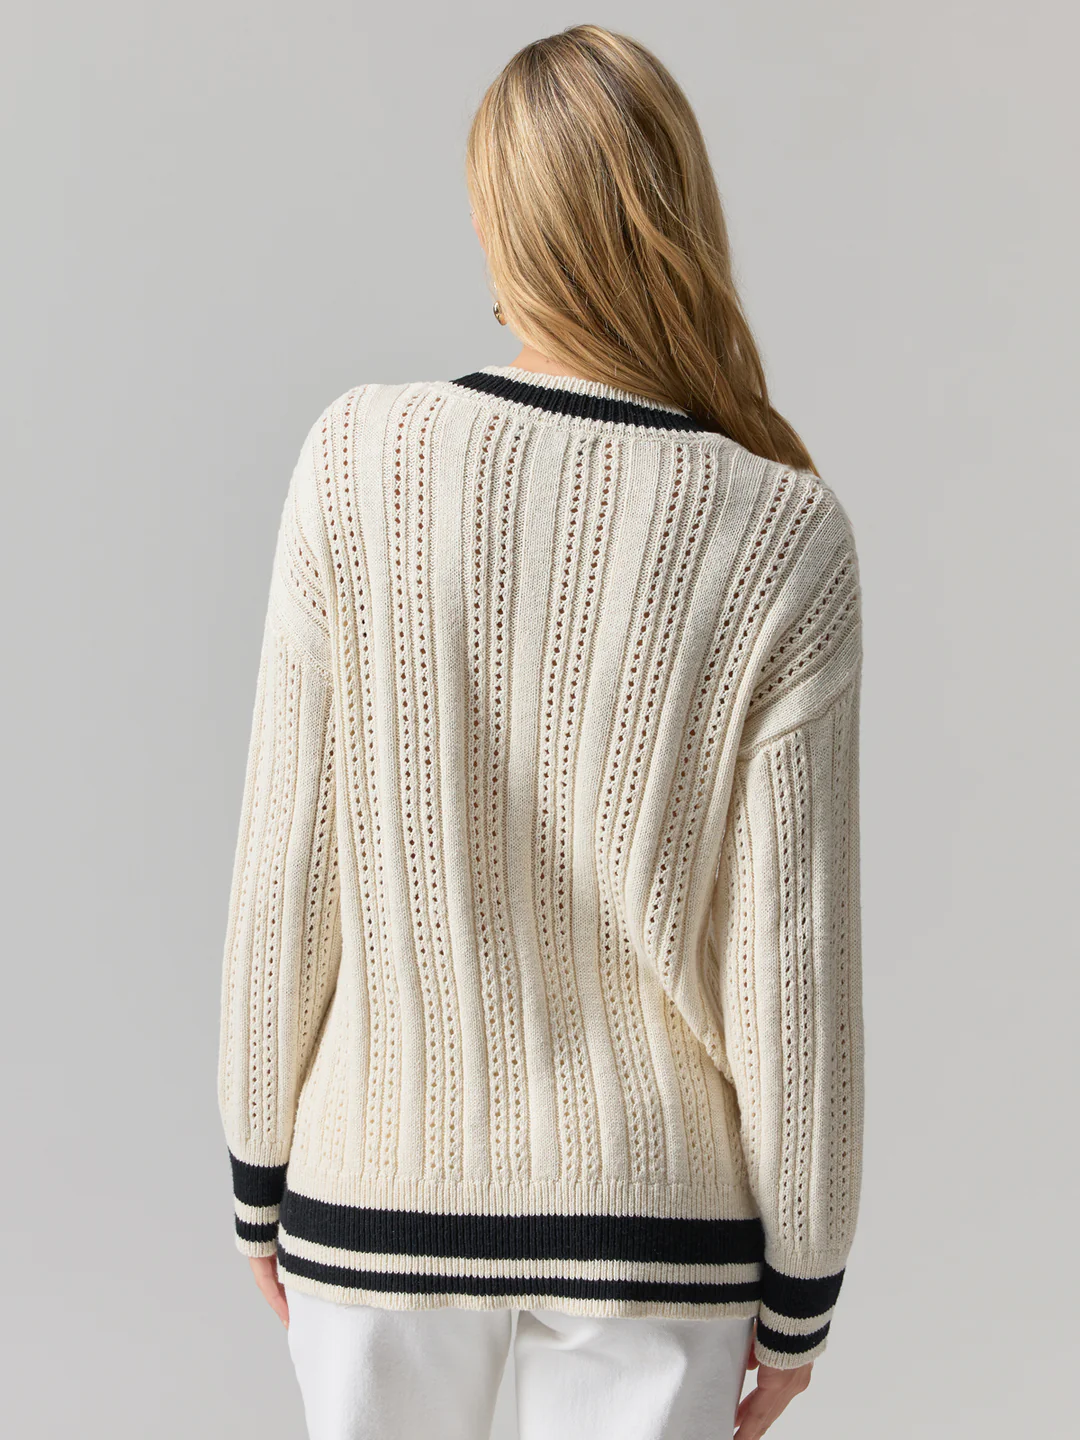 Sanctuary Sport Stripe Cardi - Natural Clothing - Tops - Sweaters - Cardigans by Sanctuary | Grace the Boutique